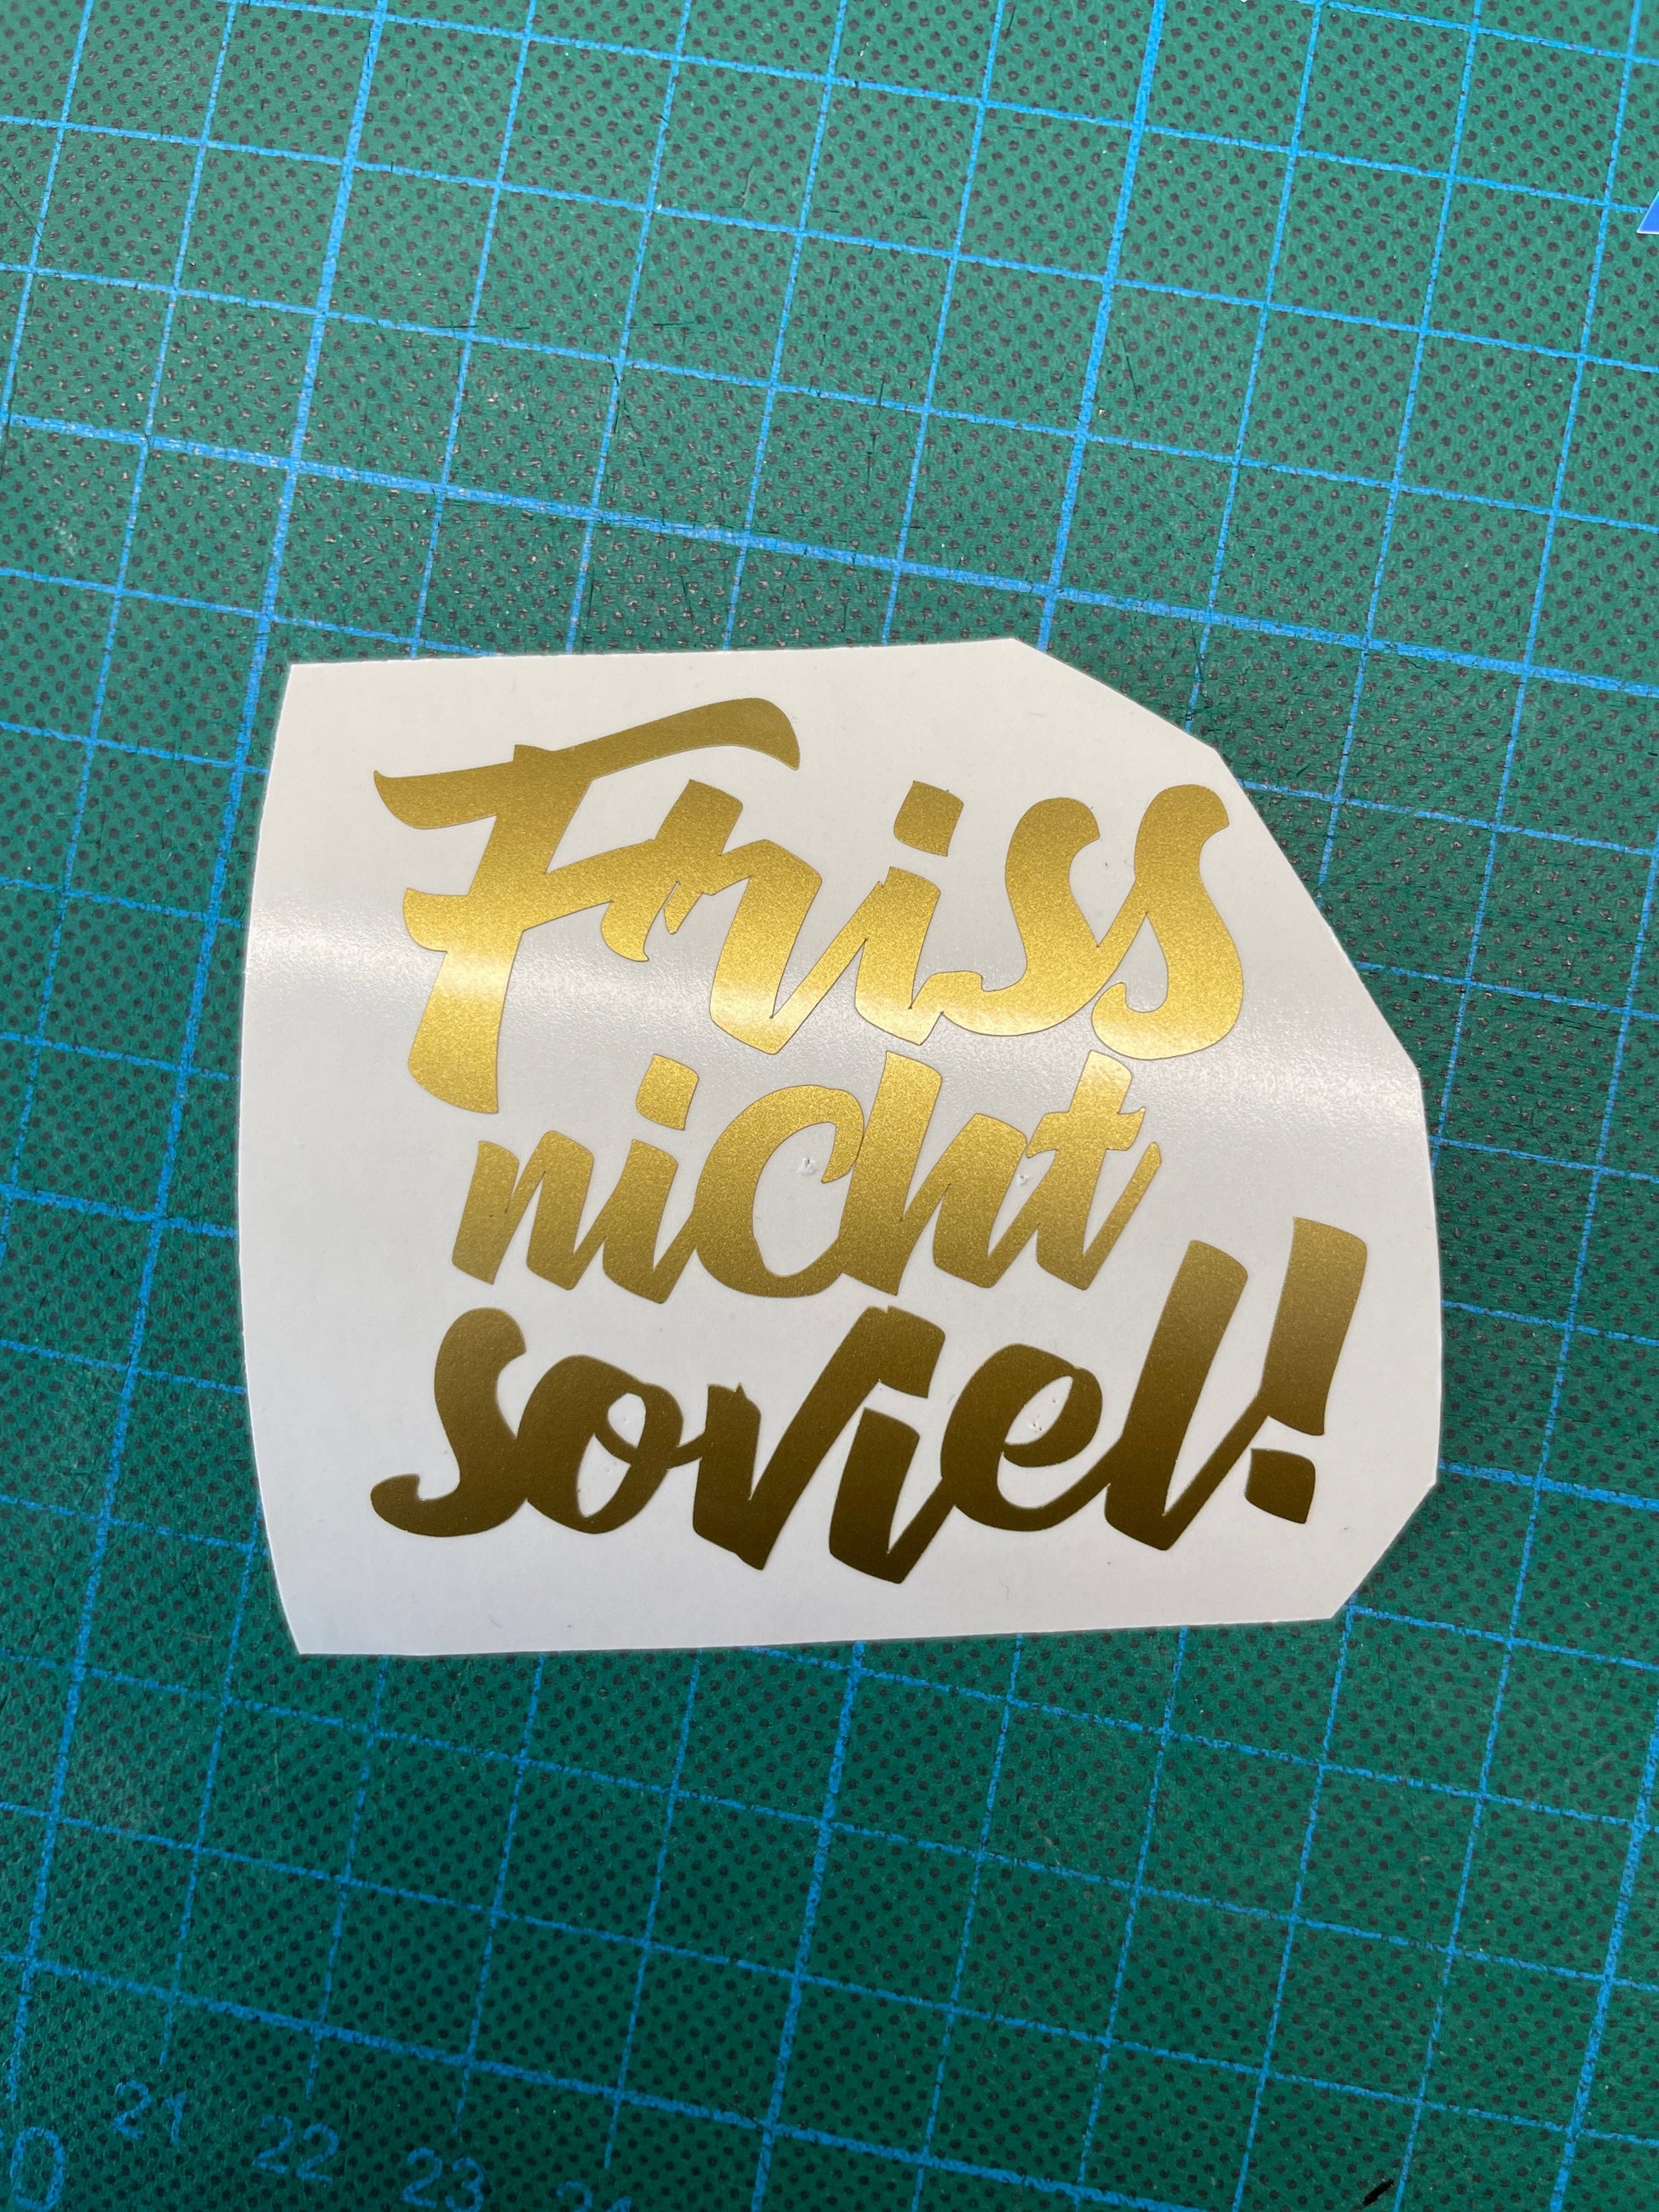 SoB-Media Folien & Sticker Gold (Glanz) / 6x11 cm Friss nicht soviel! - Kühlschrank / Möbelaufkleber E-Bike-Community